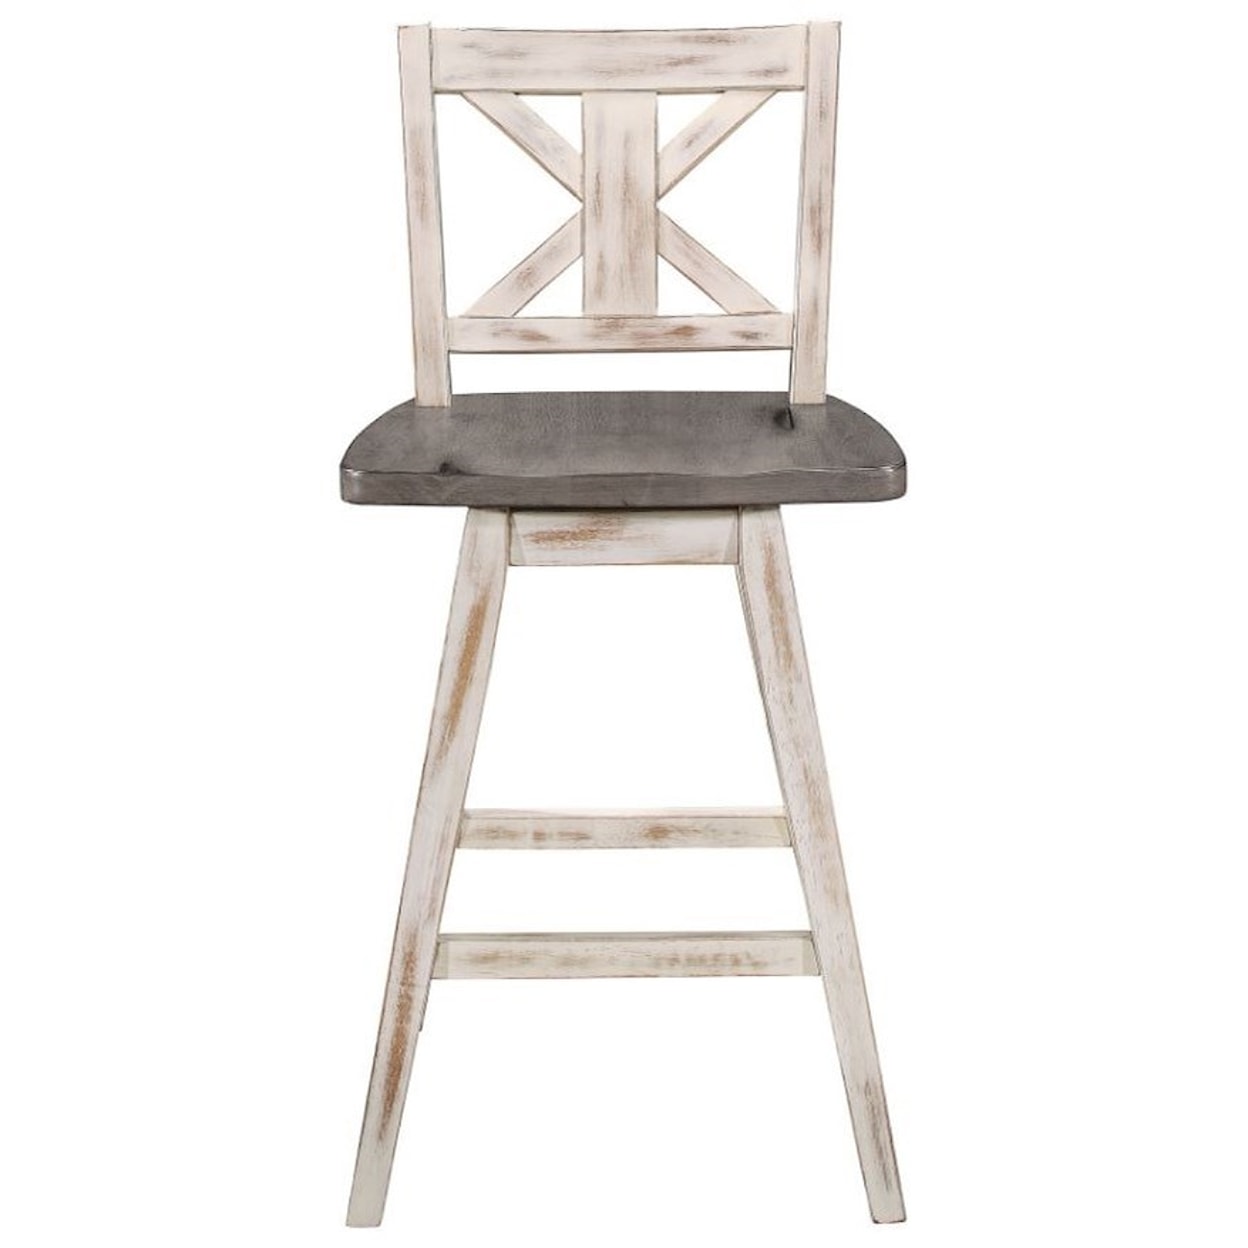 Homelegance Amsonia Counter Height Swivel Chair